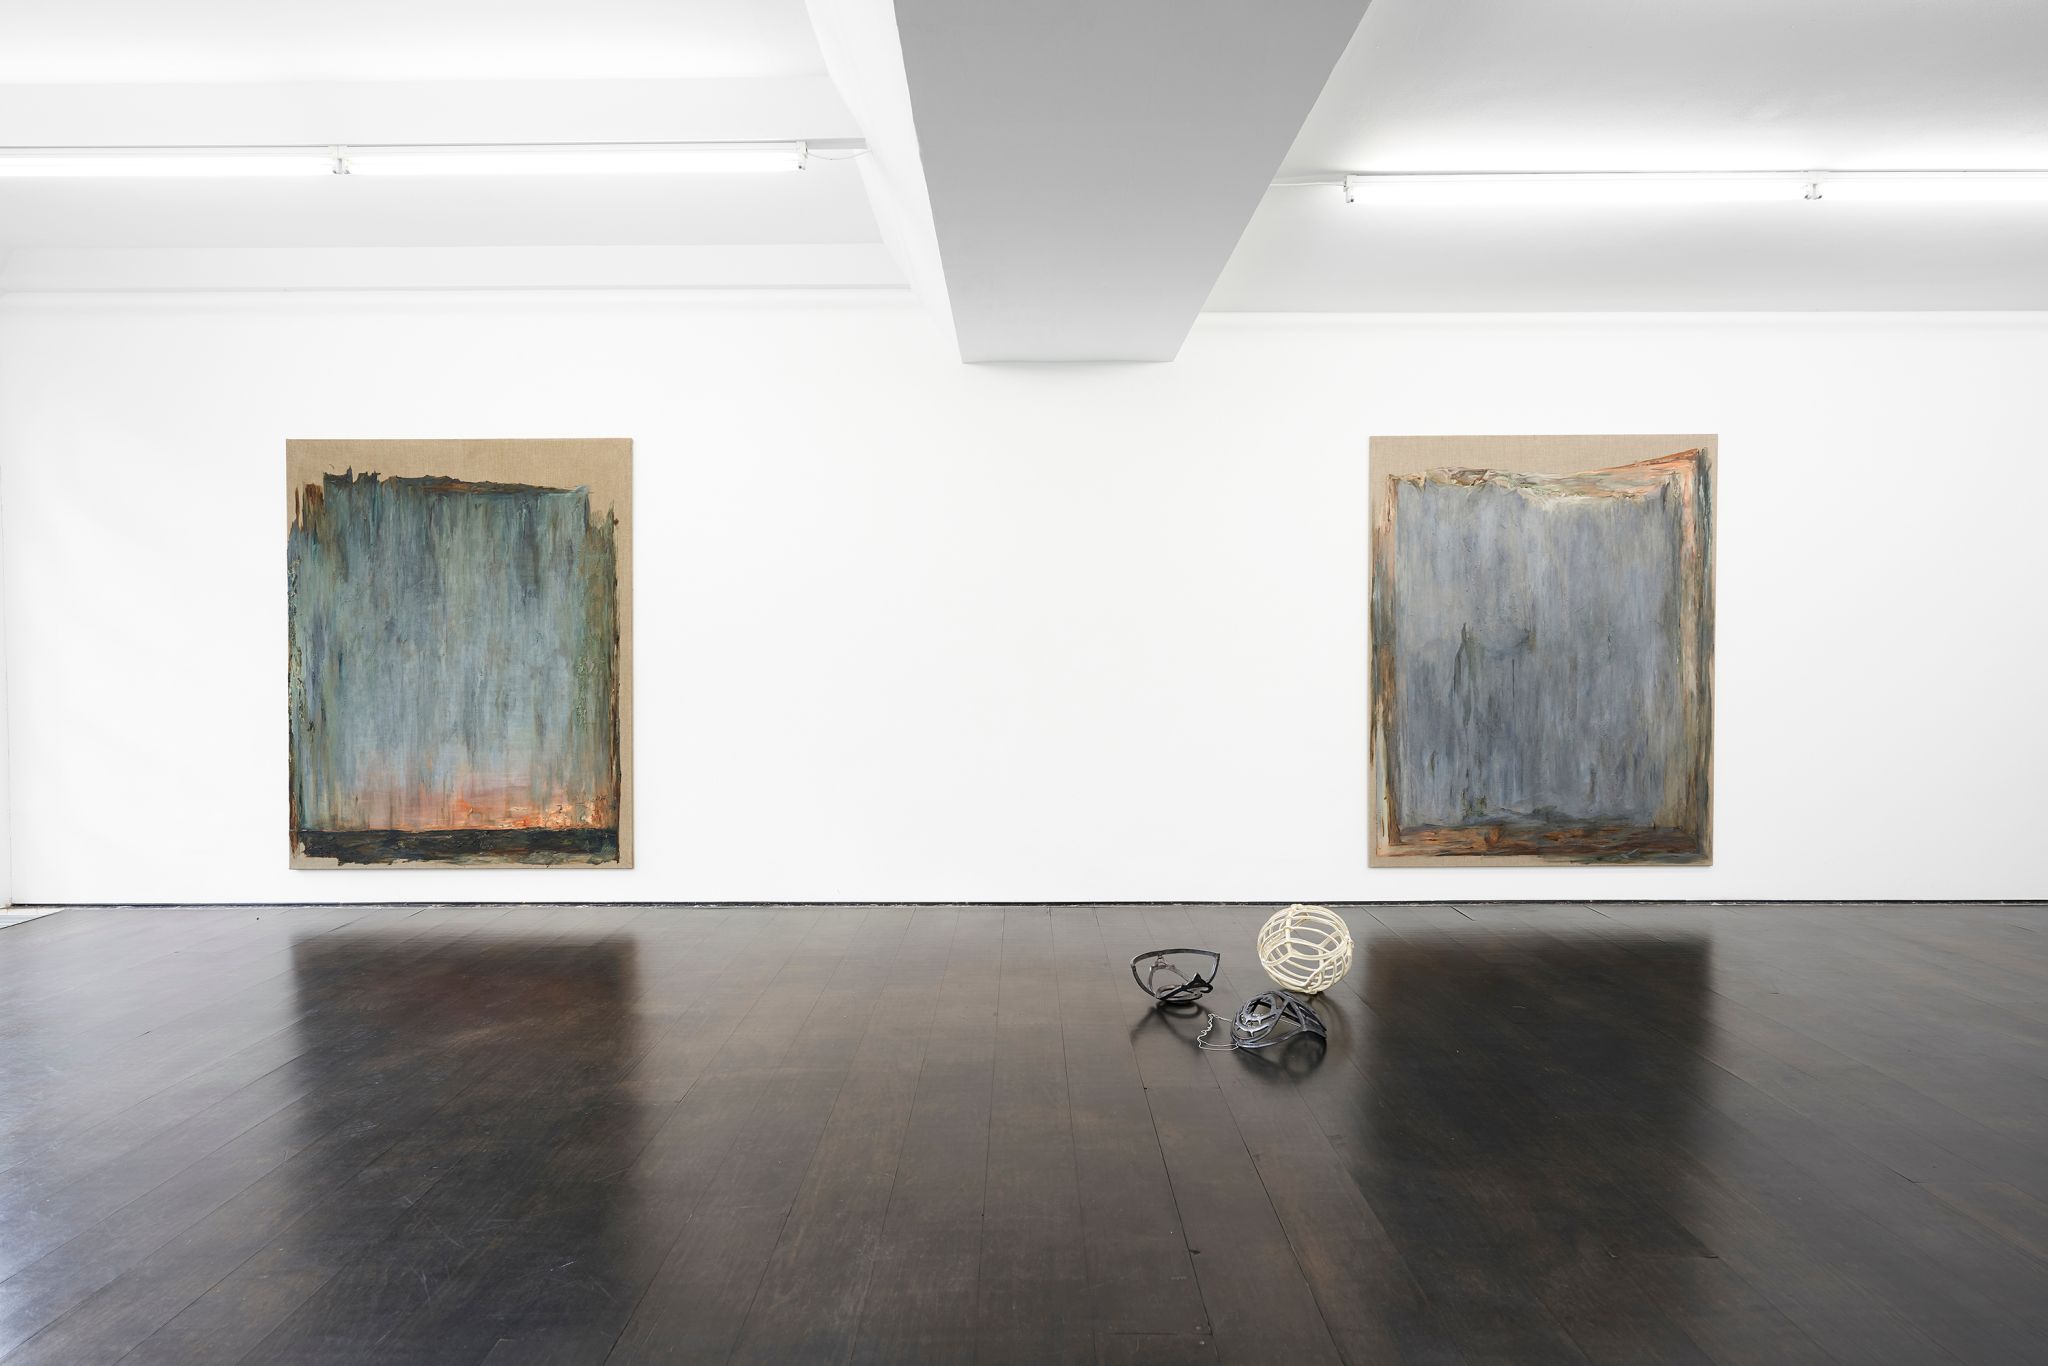 Installation view, Hanna-Maria Hammari, Vera Palme, Double, Deborah Schamoni, 2020